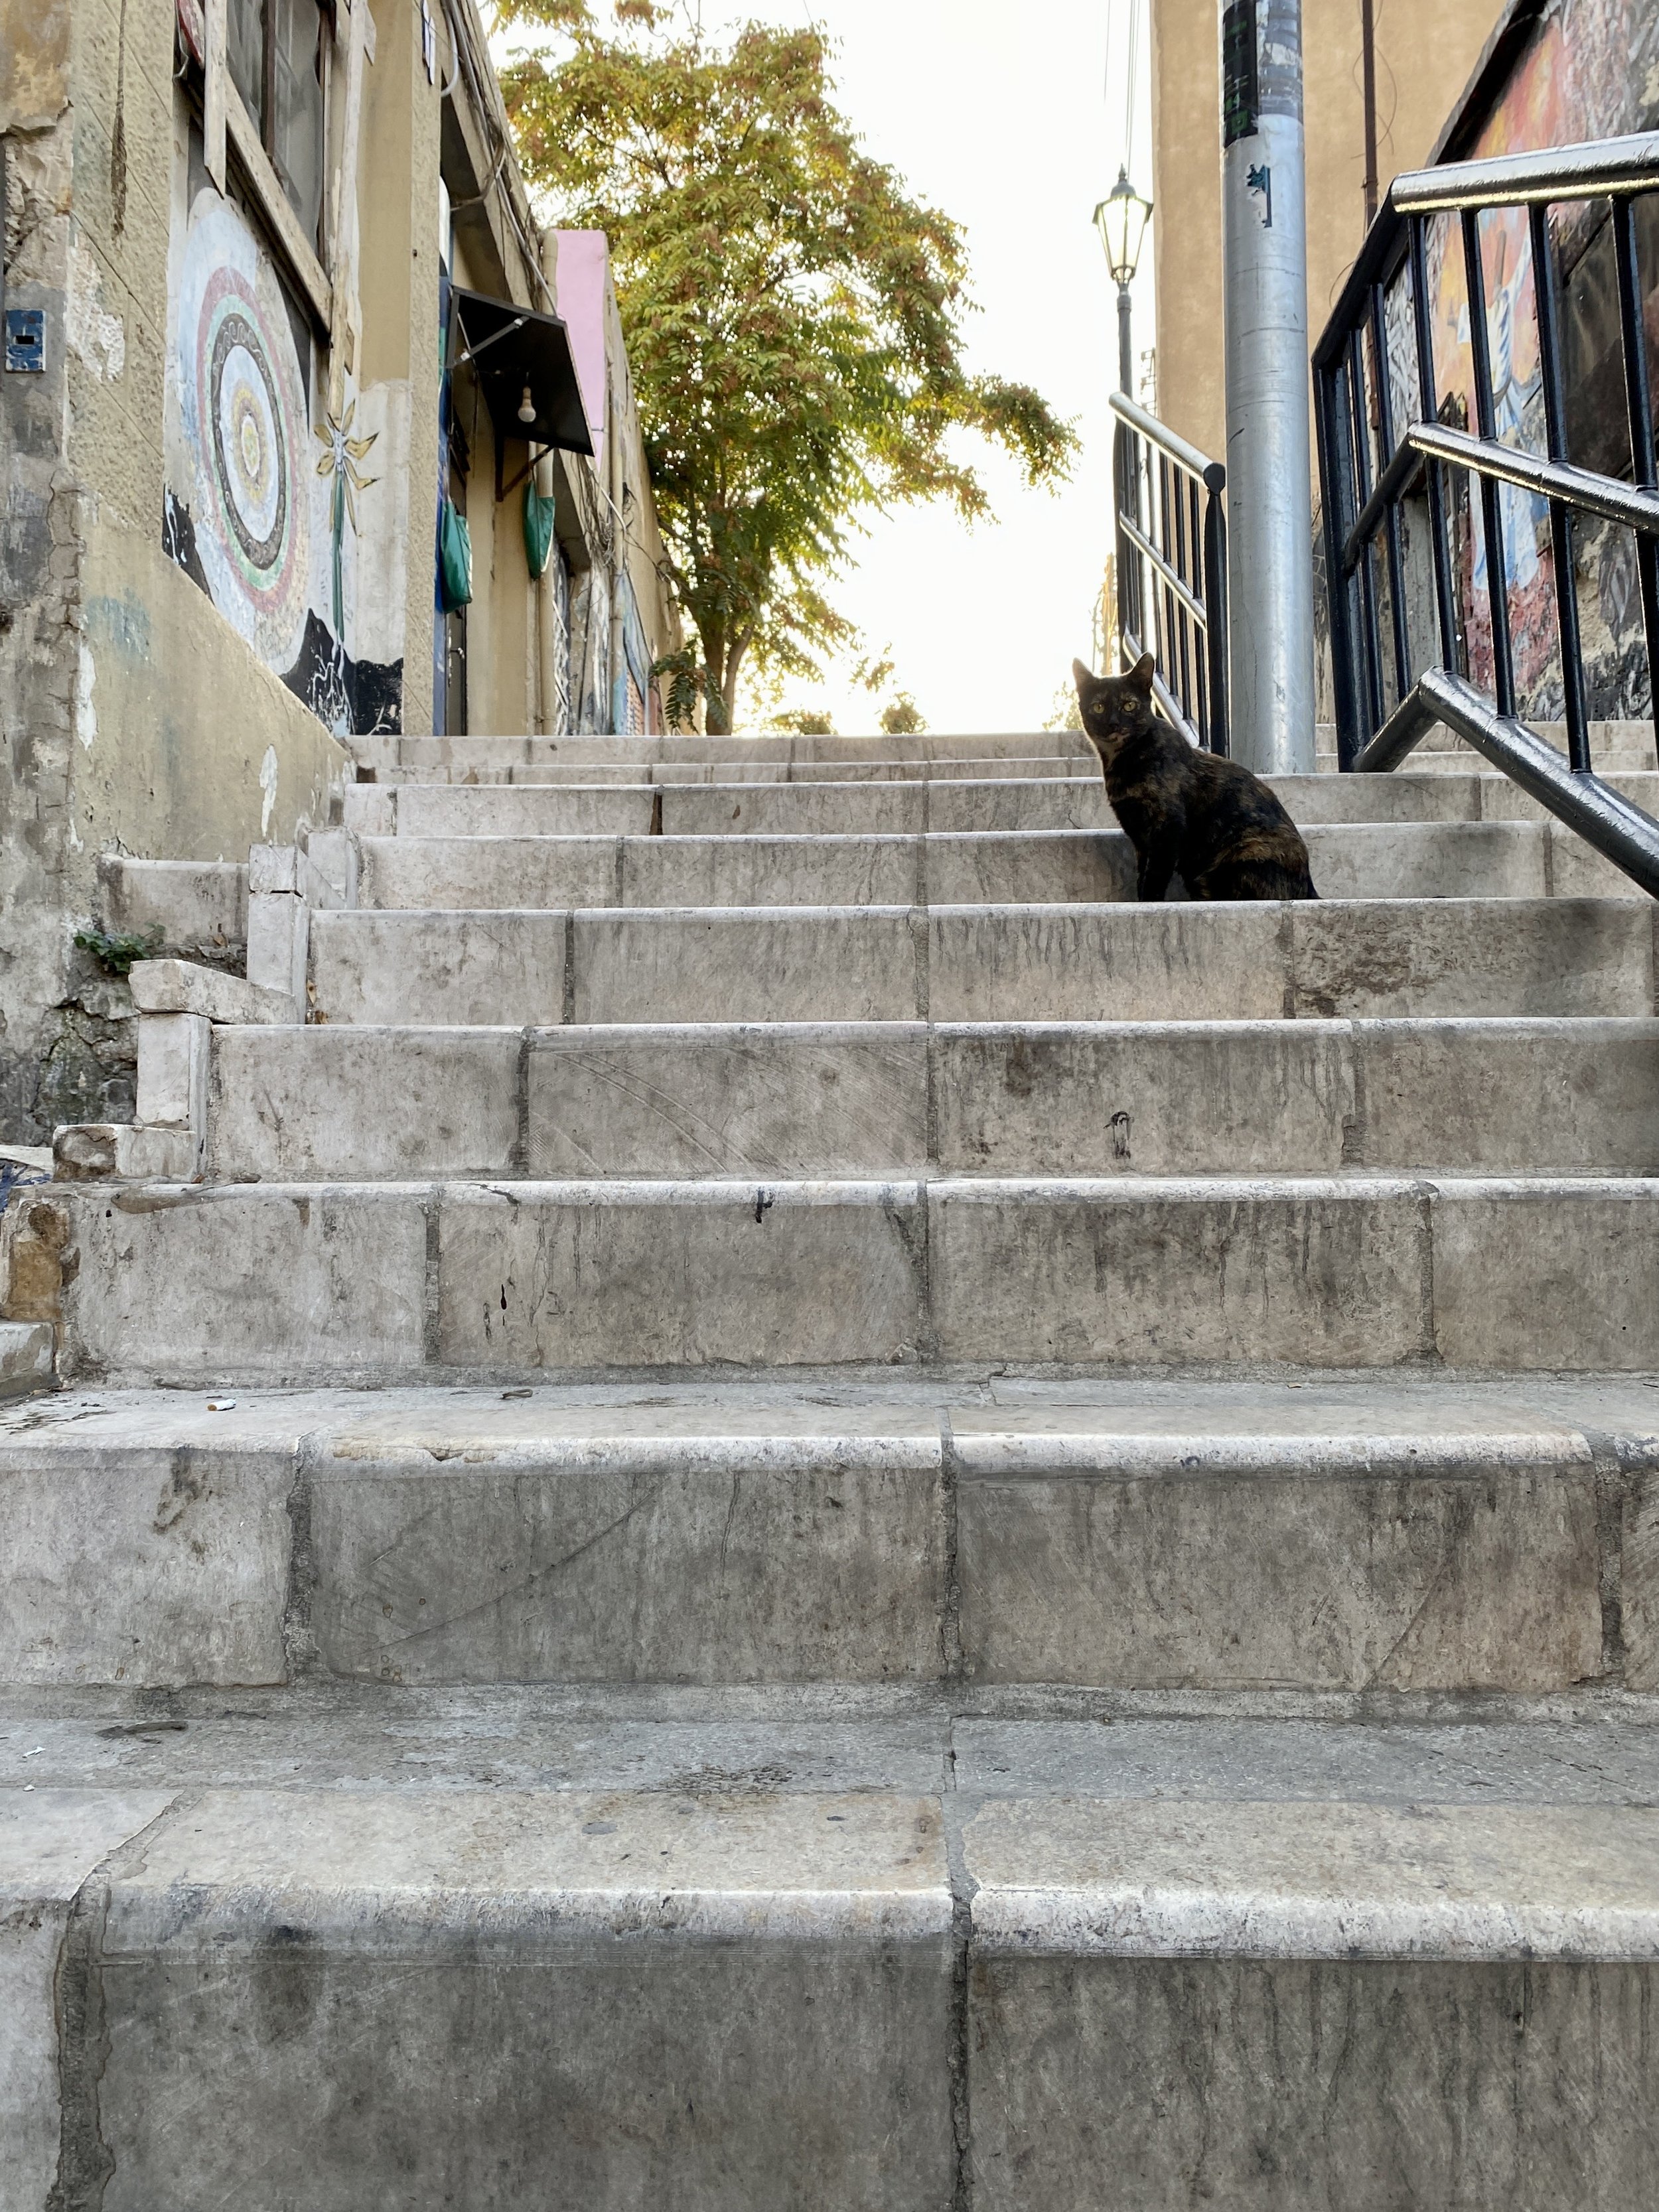 Cat admiring street art